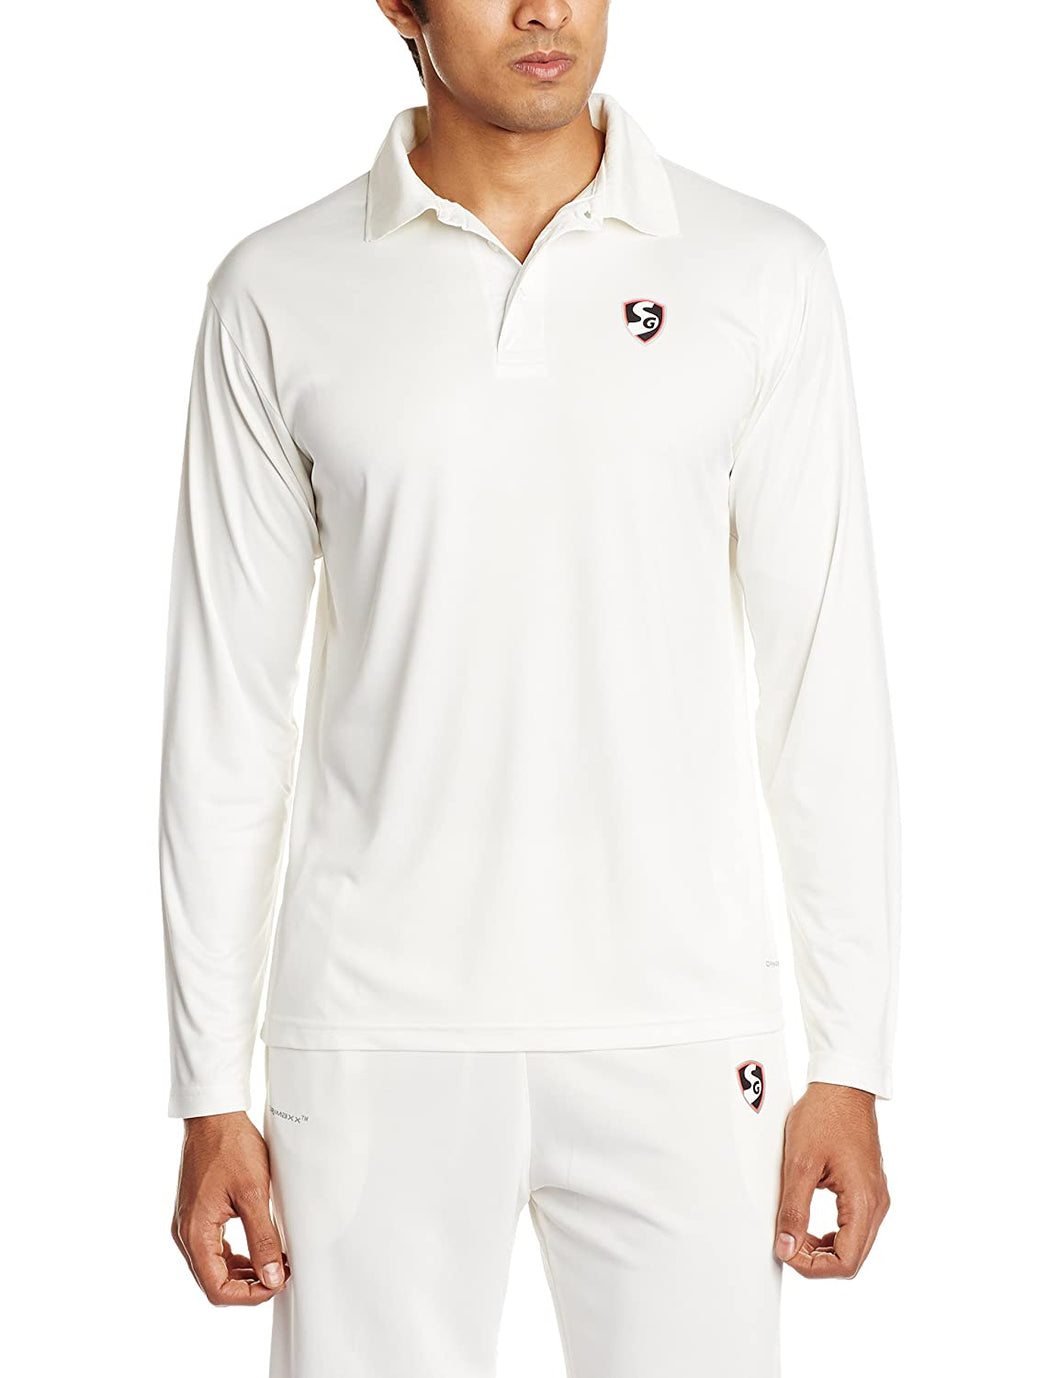 SG Club Full Sleeves Cricket White Shirt